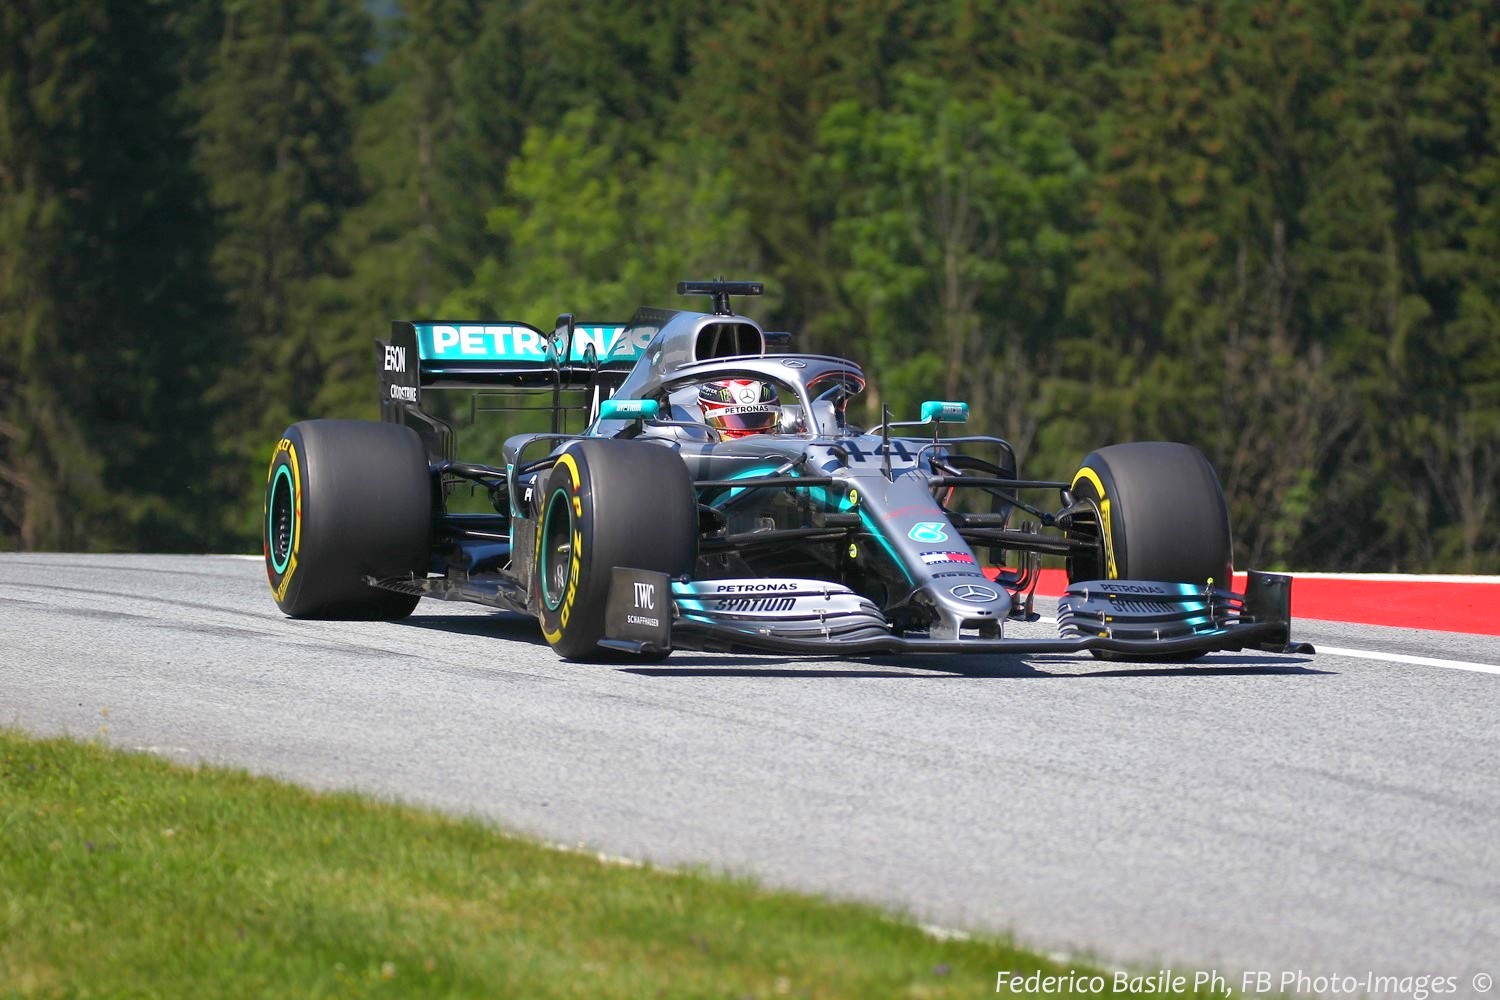 Hamilton knows his superior Mercedes car will prevail